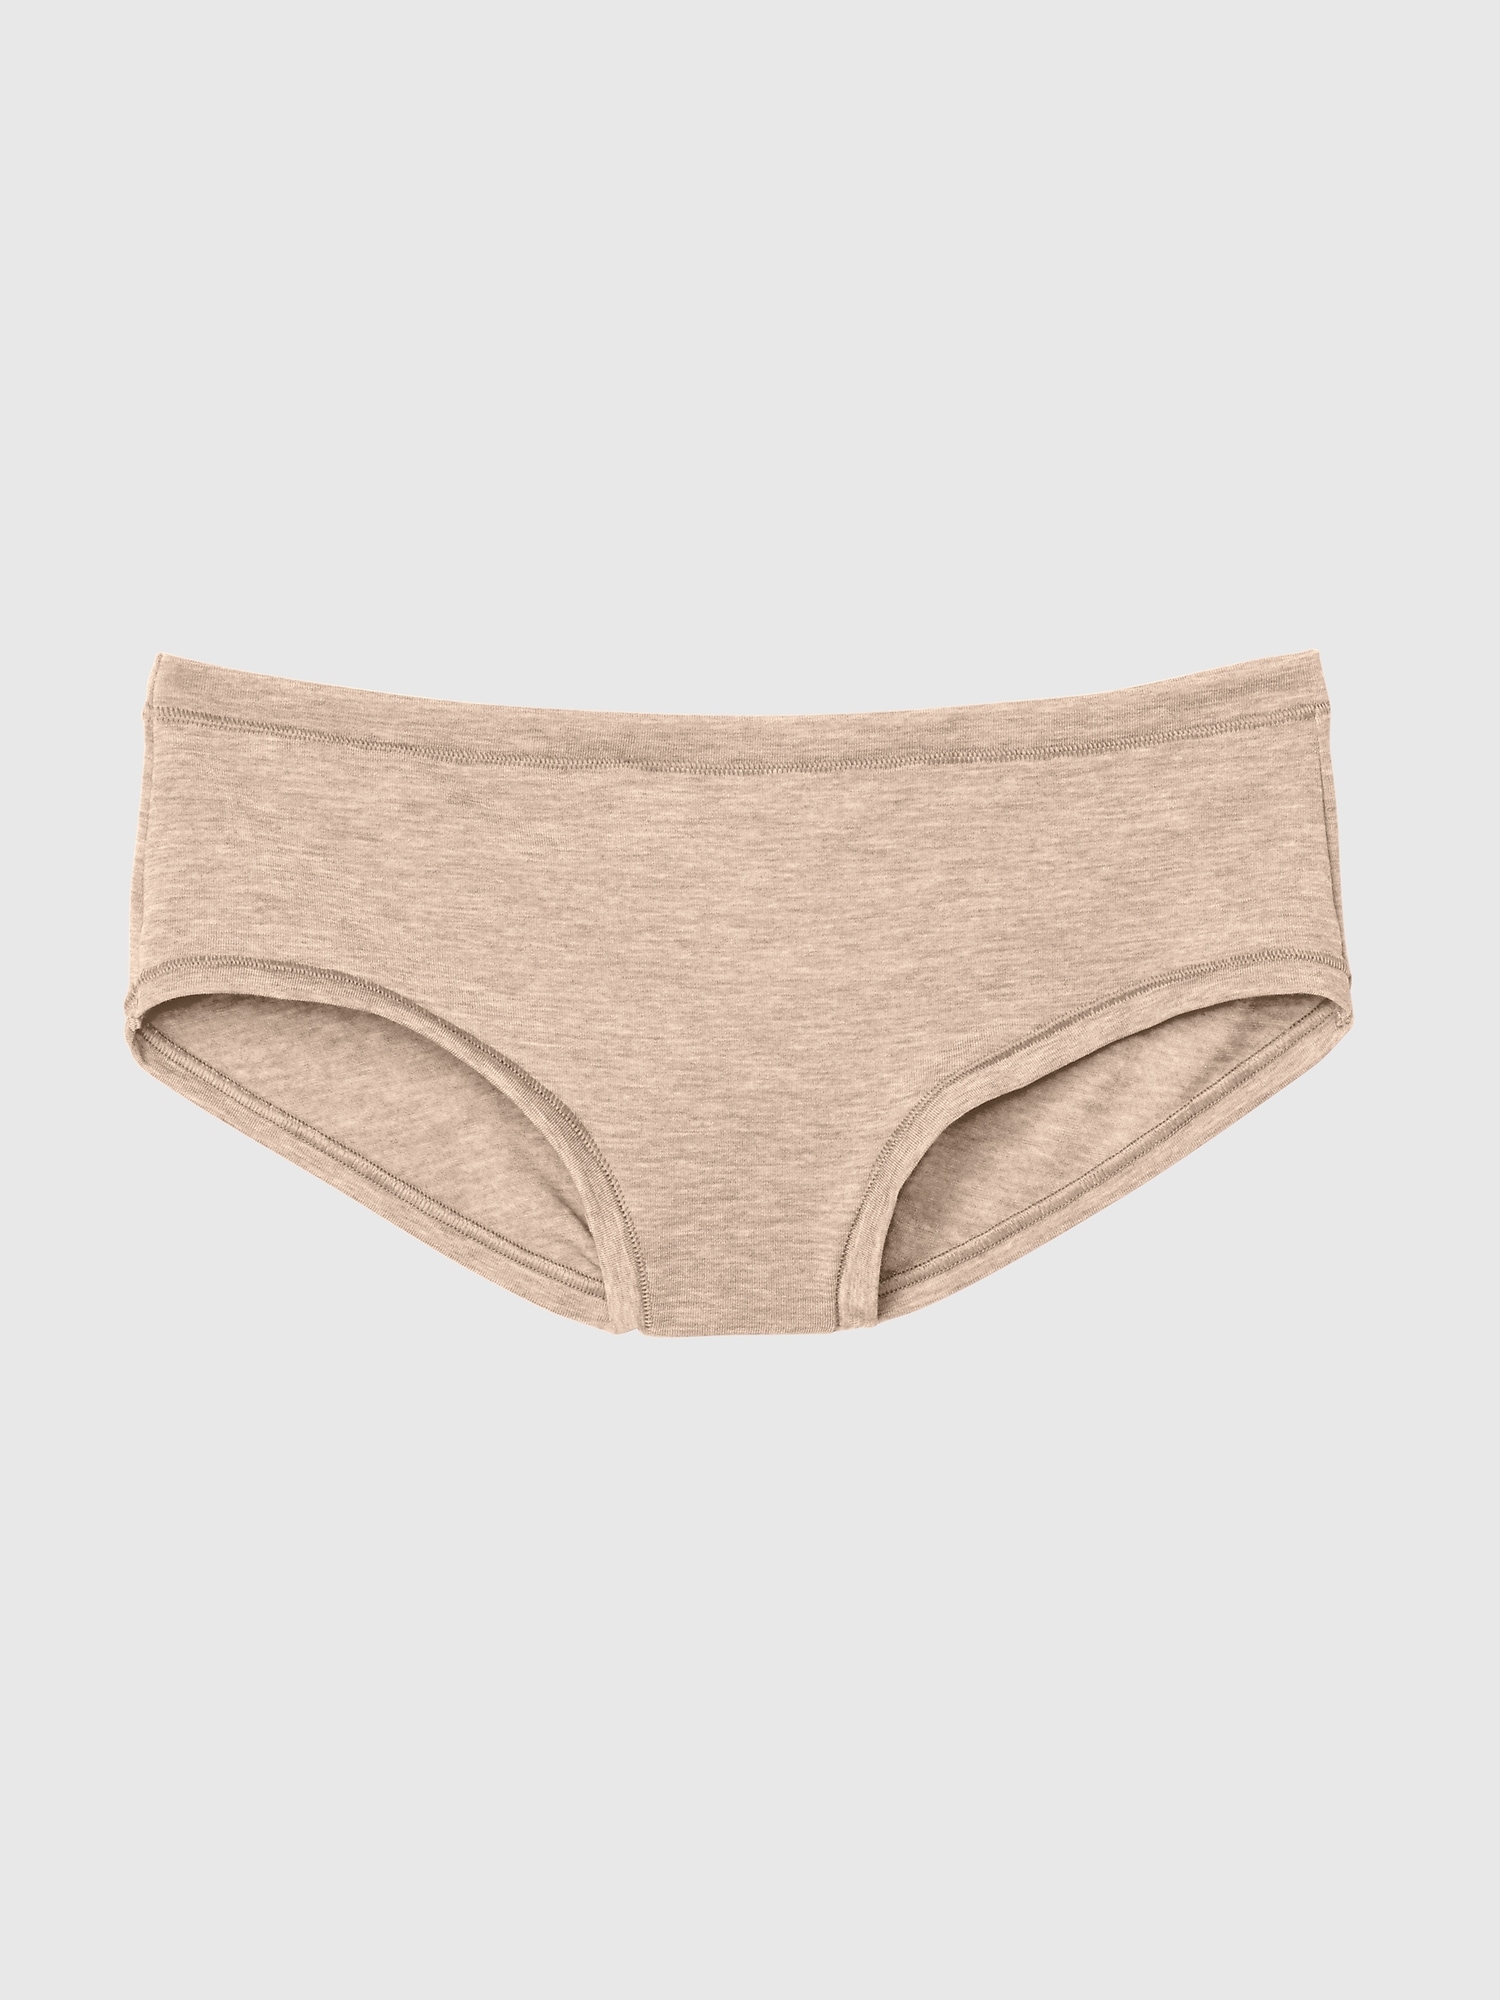 GAP Women's 3-Pack Breathe Hipster Underpants Underwear, Multi, X